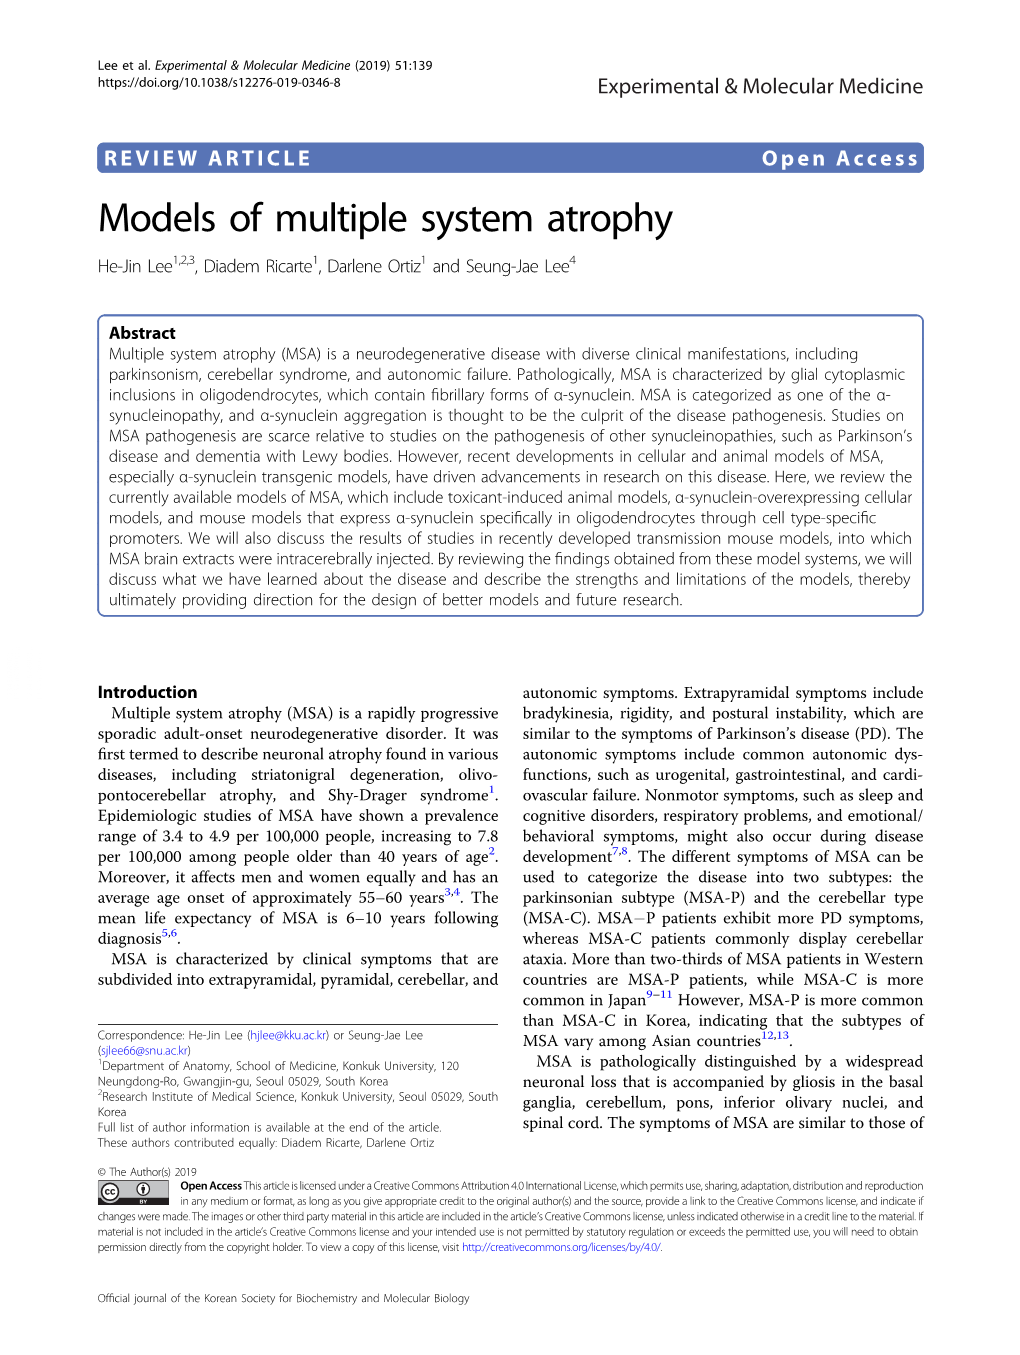 Models of Multiple System Atrophy He-Jin Lee1,2,3, Diadem Ricarte1,Darleneortiz1 and Seung-Jae Lee4